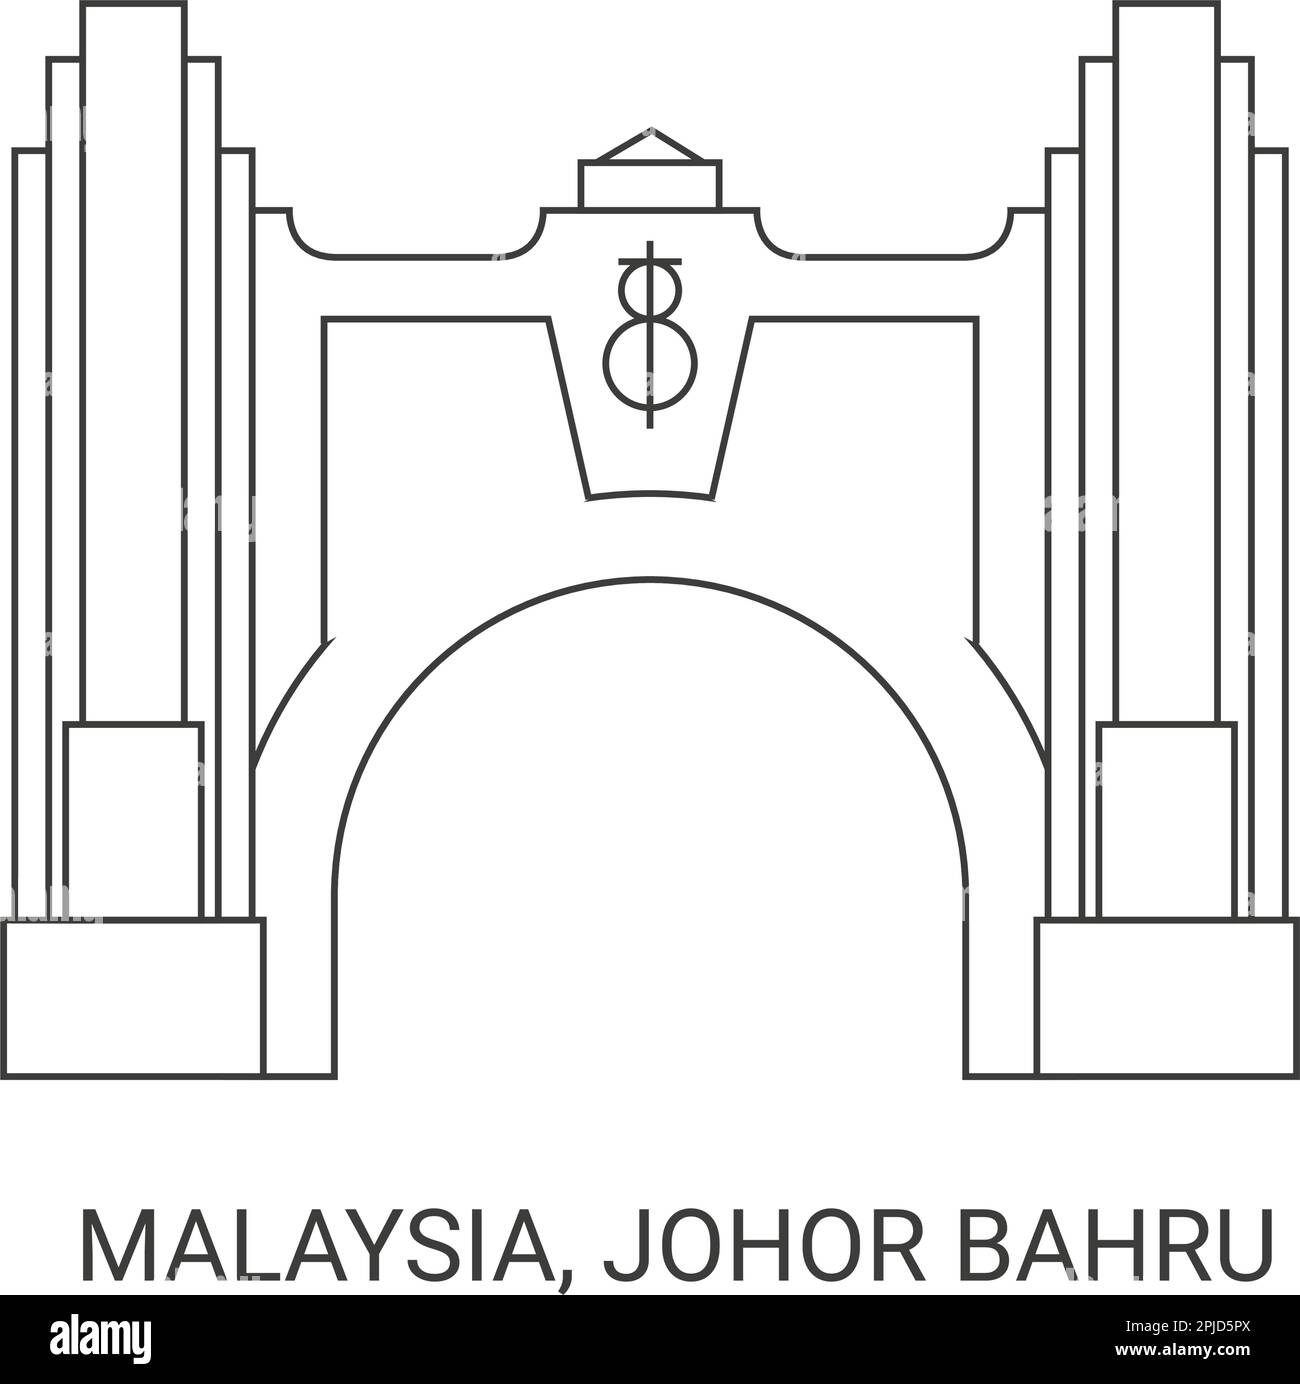 Malaysia, Johor Bahru travel landmark vector illustration Stock Vector ...